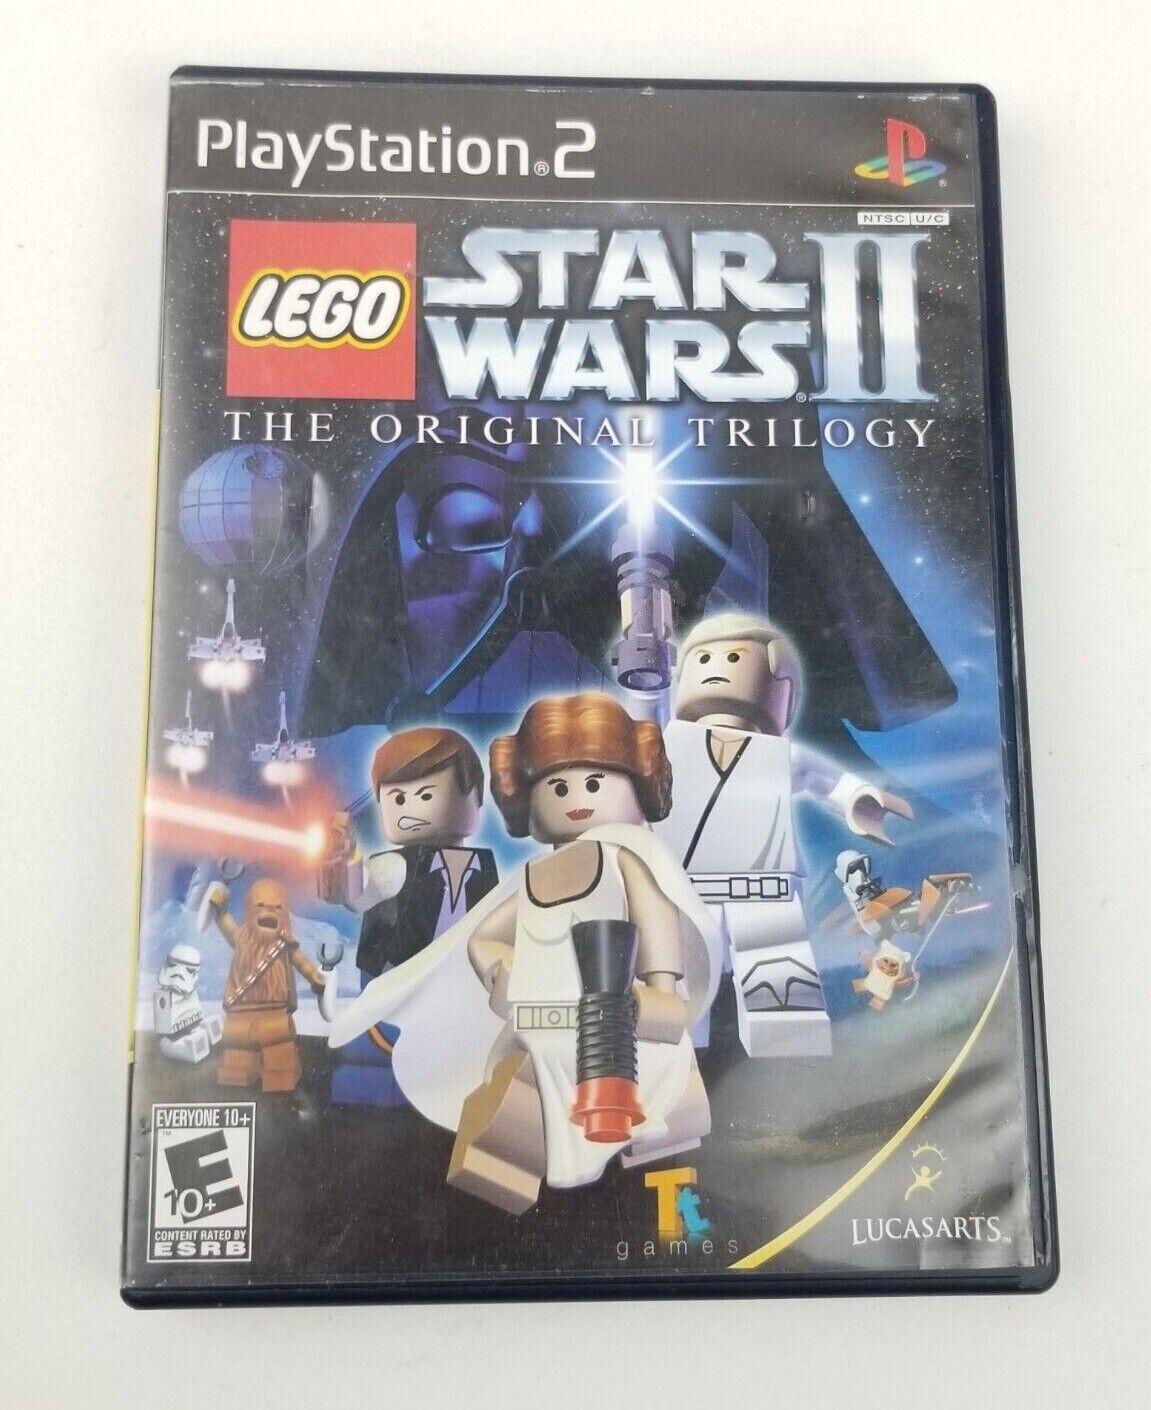 Multiplikation Auto Nøjagtig Lego Star Wars 2 II: The Original Trilogy - Playstation 2 PS2 No Manual |  eBay